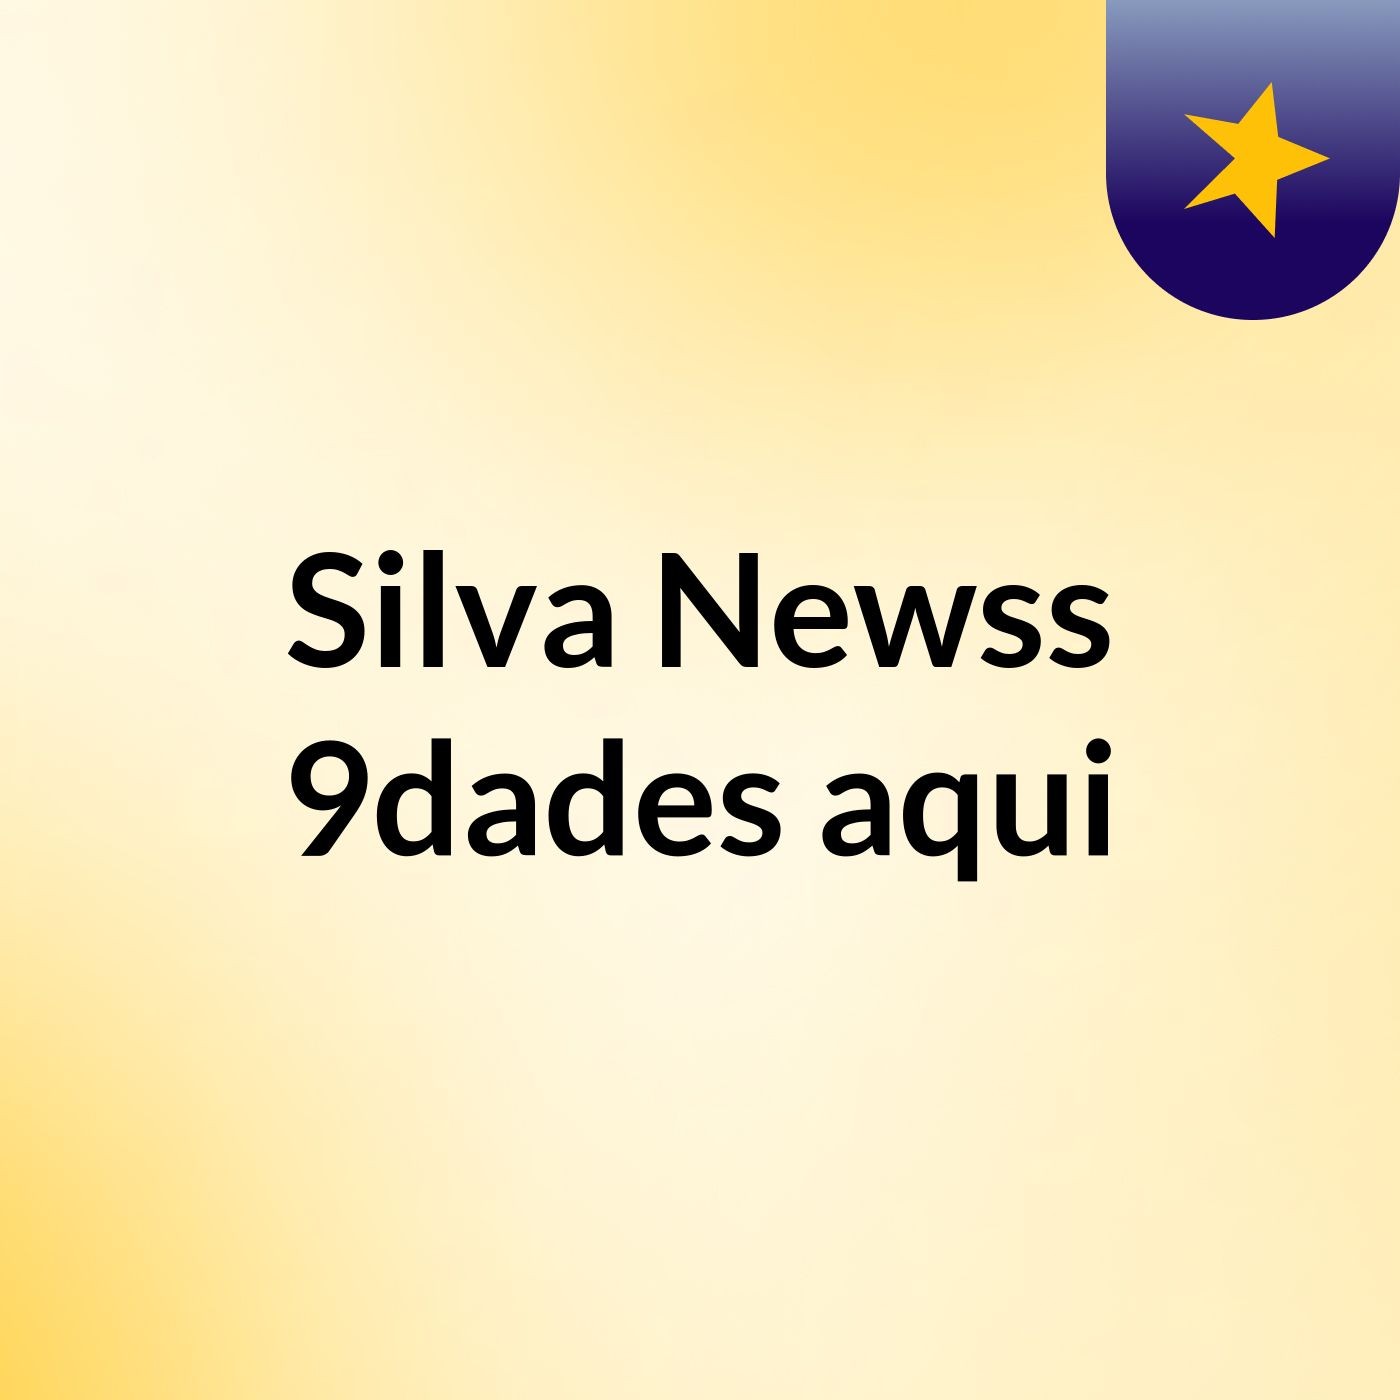 Silva Newss 9dades aqui